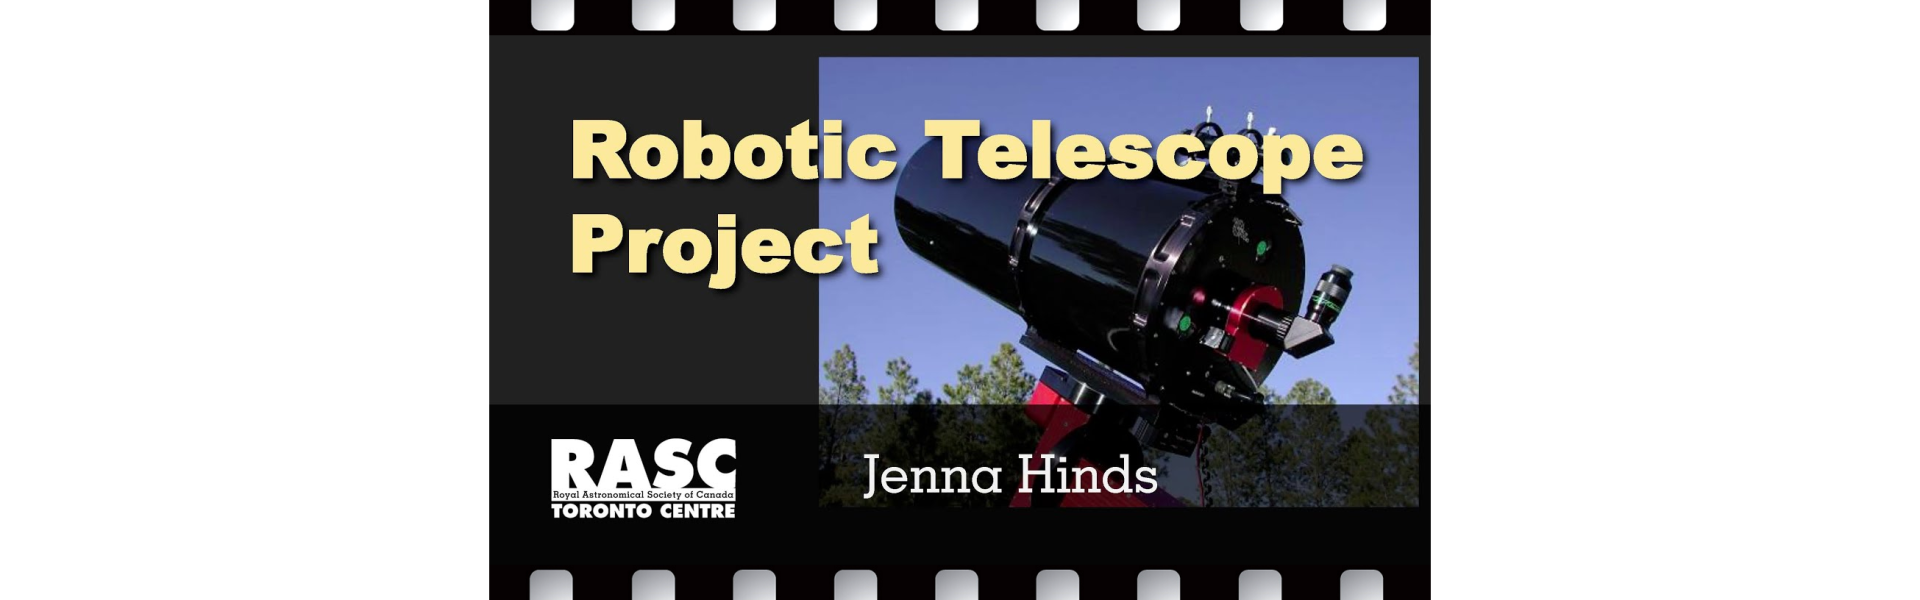 Robotic Telescope Project